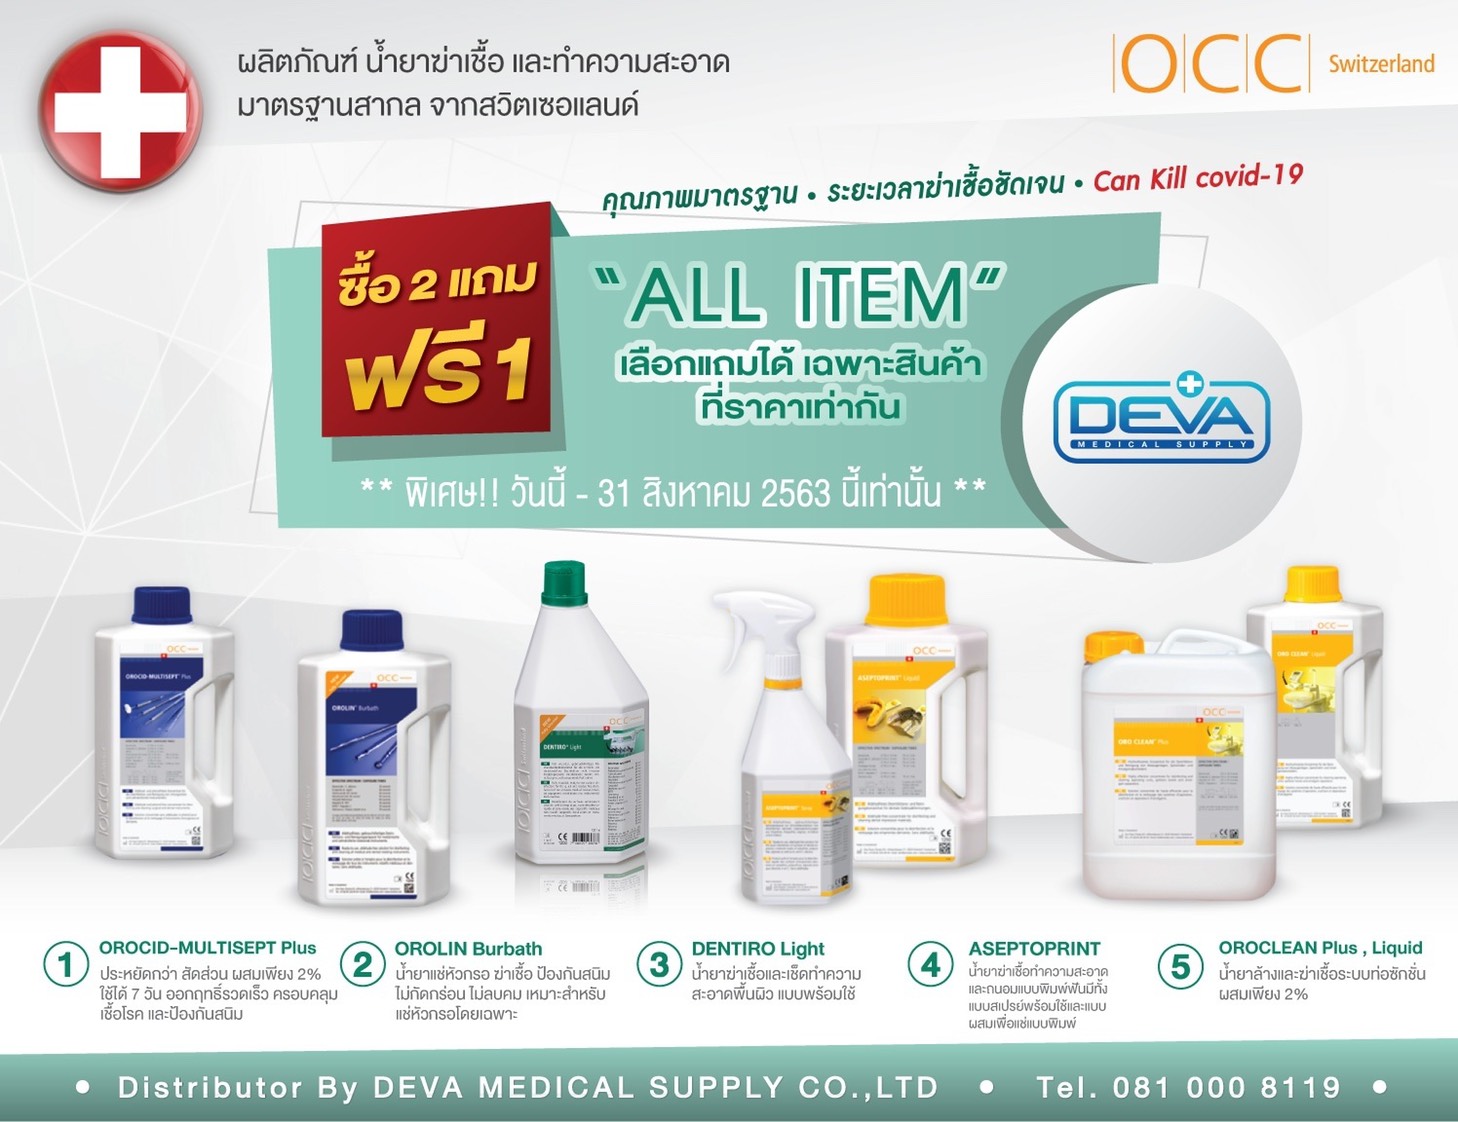 Deva OCC from Switzerland Hot Deal Promotion